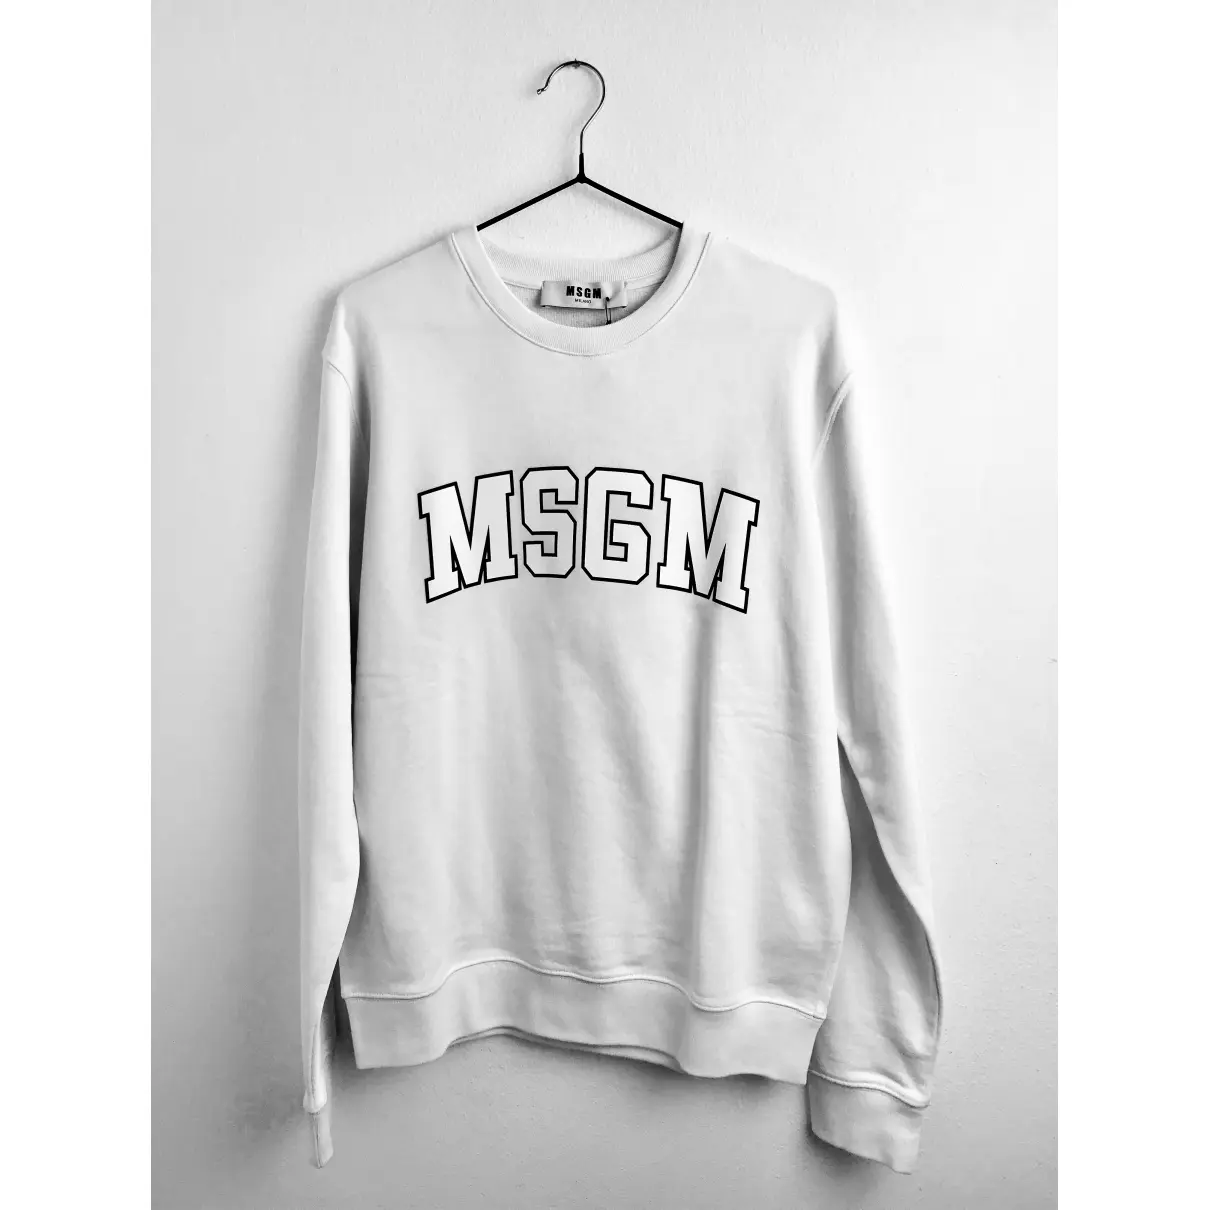 Buy MSGM White Cotton Knitwear online